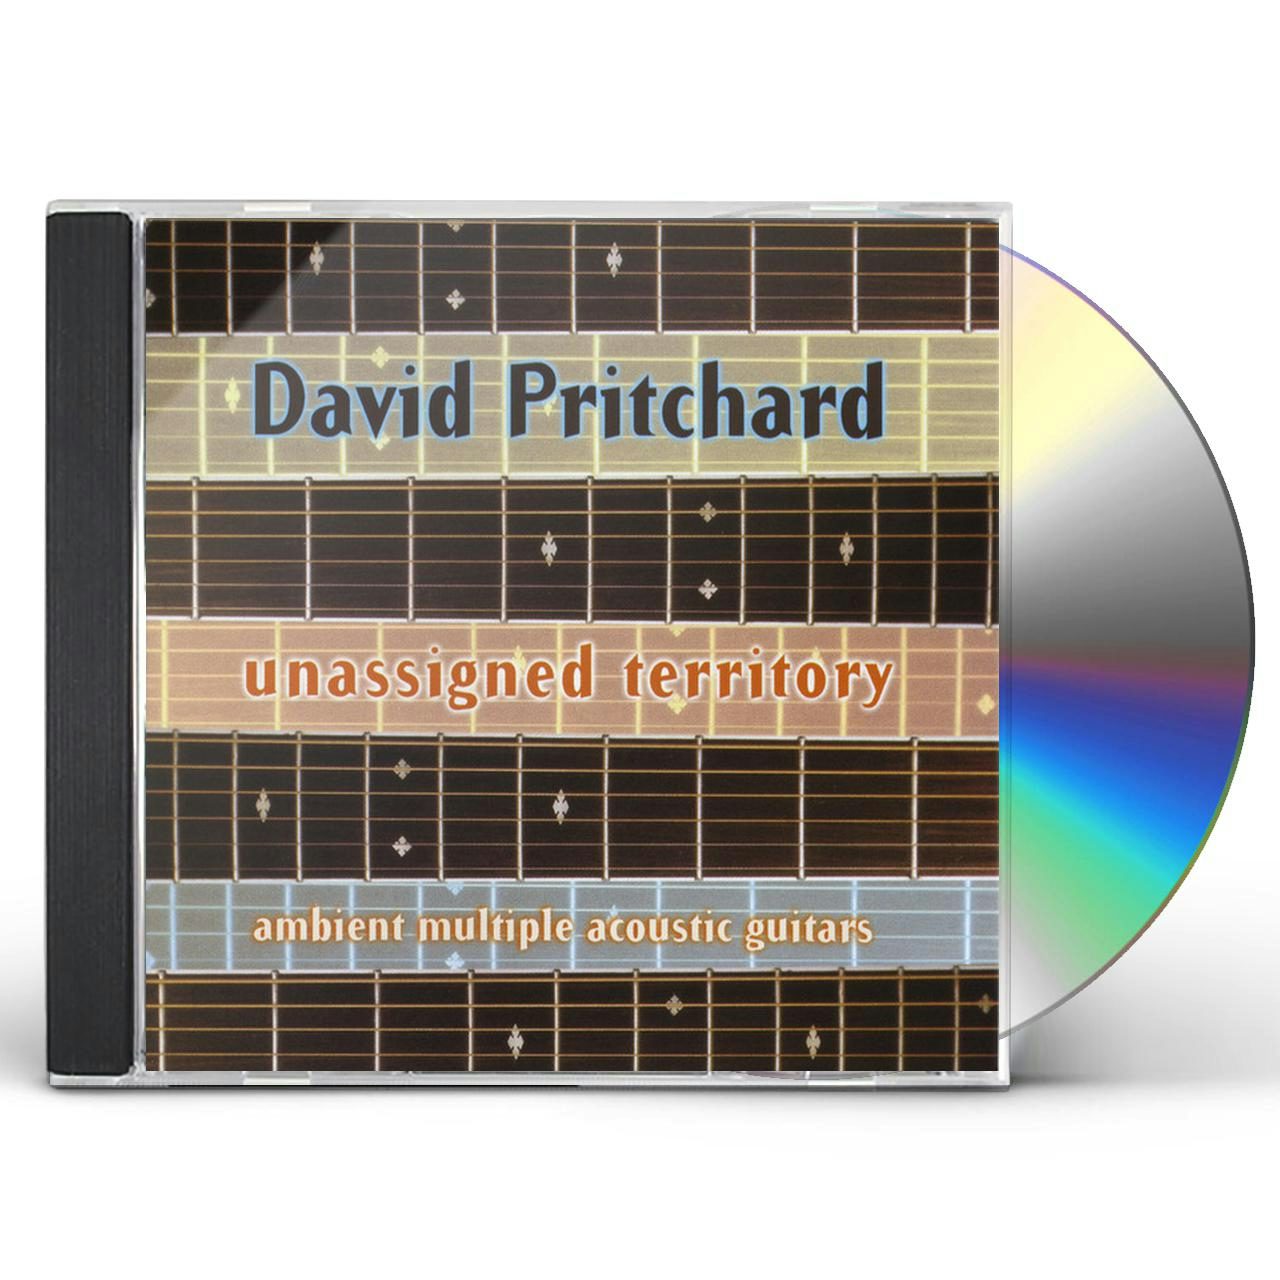 city dreams cd - David Pritchard